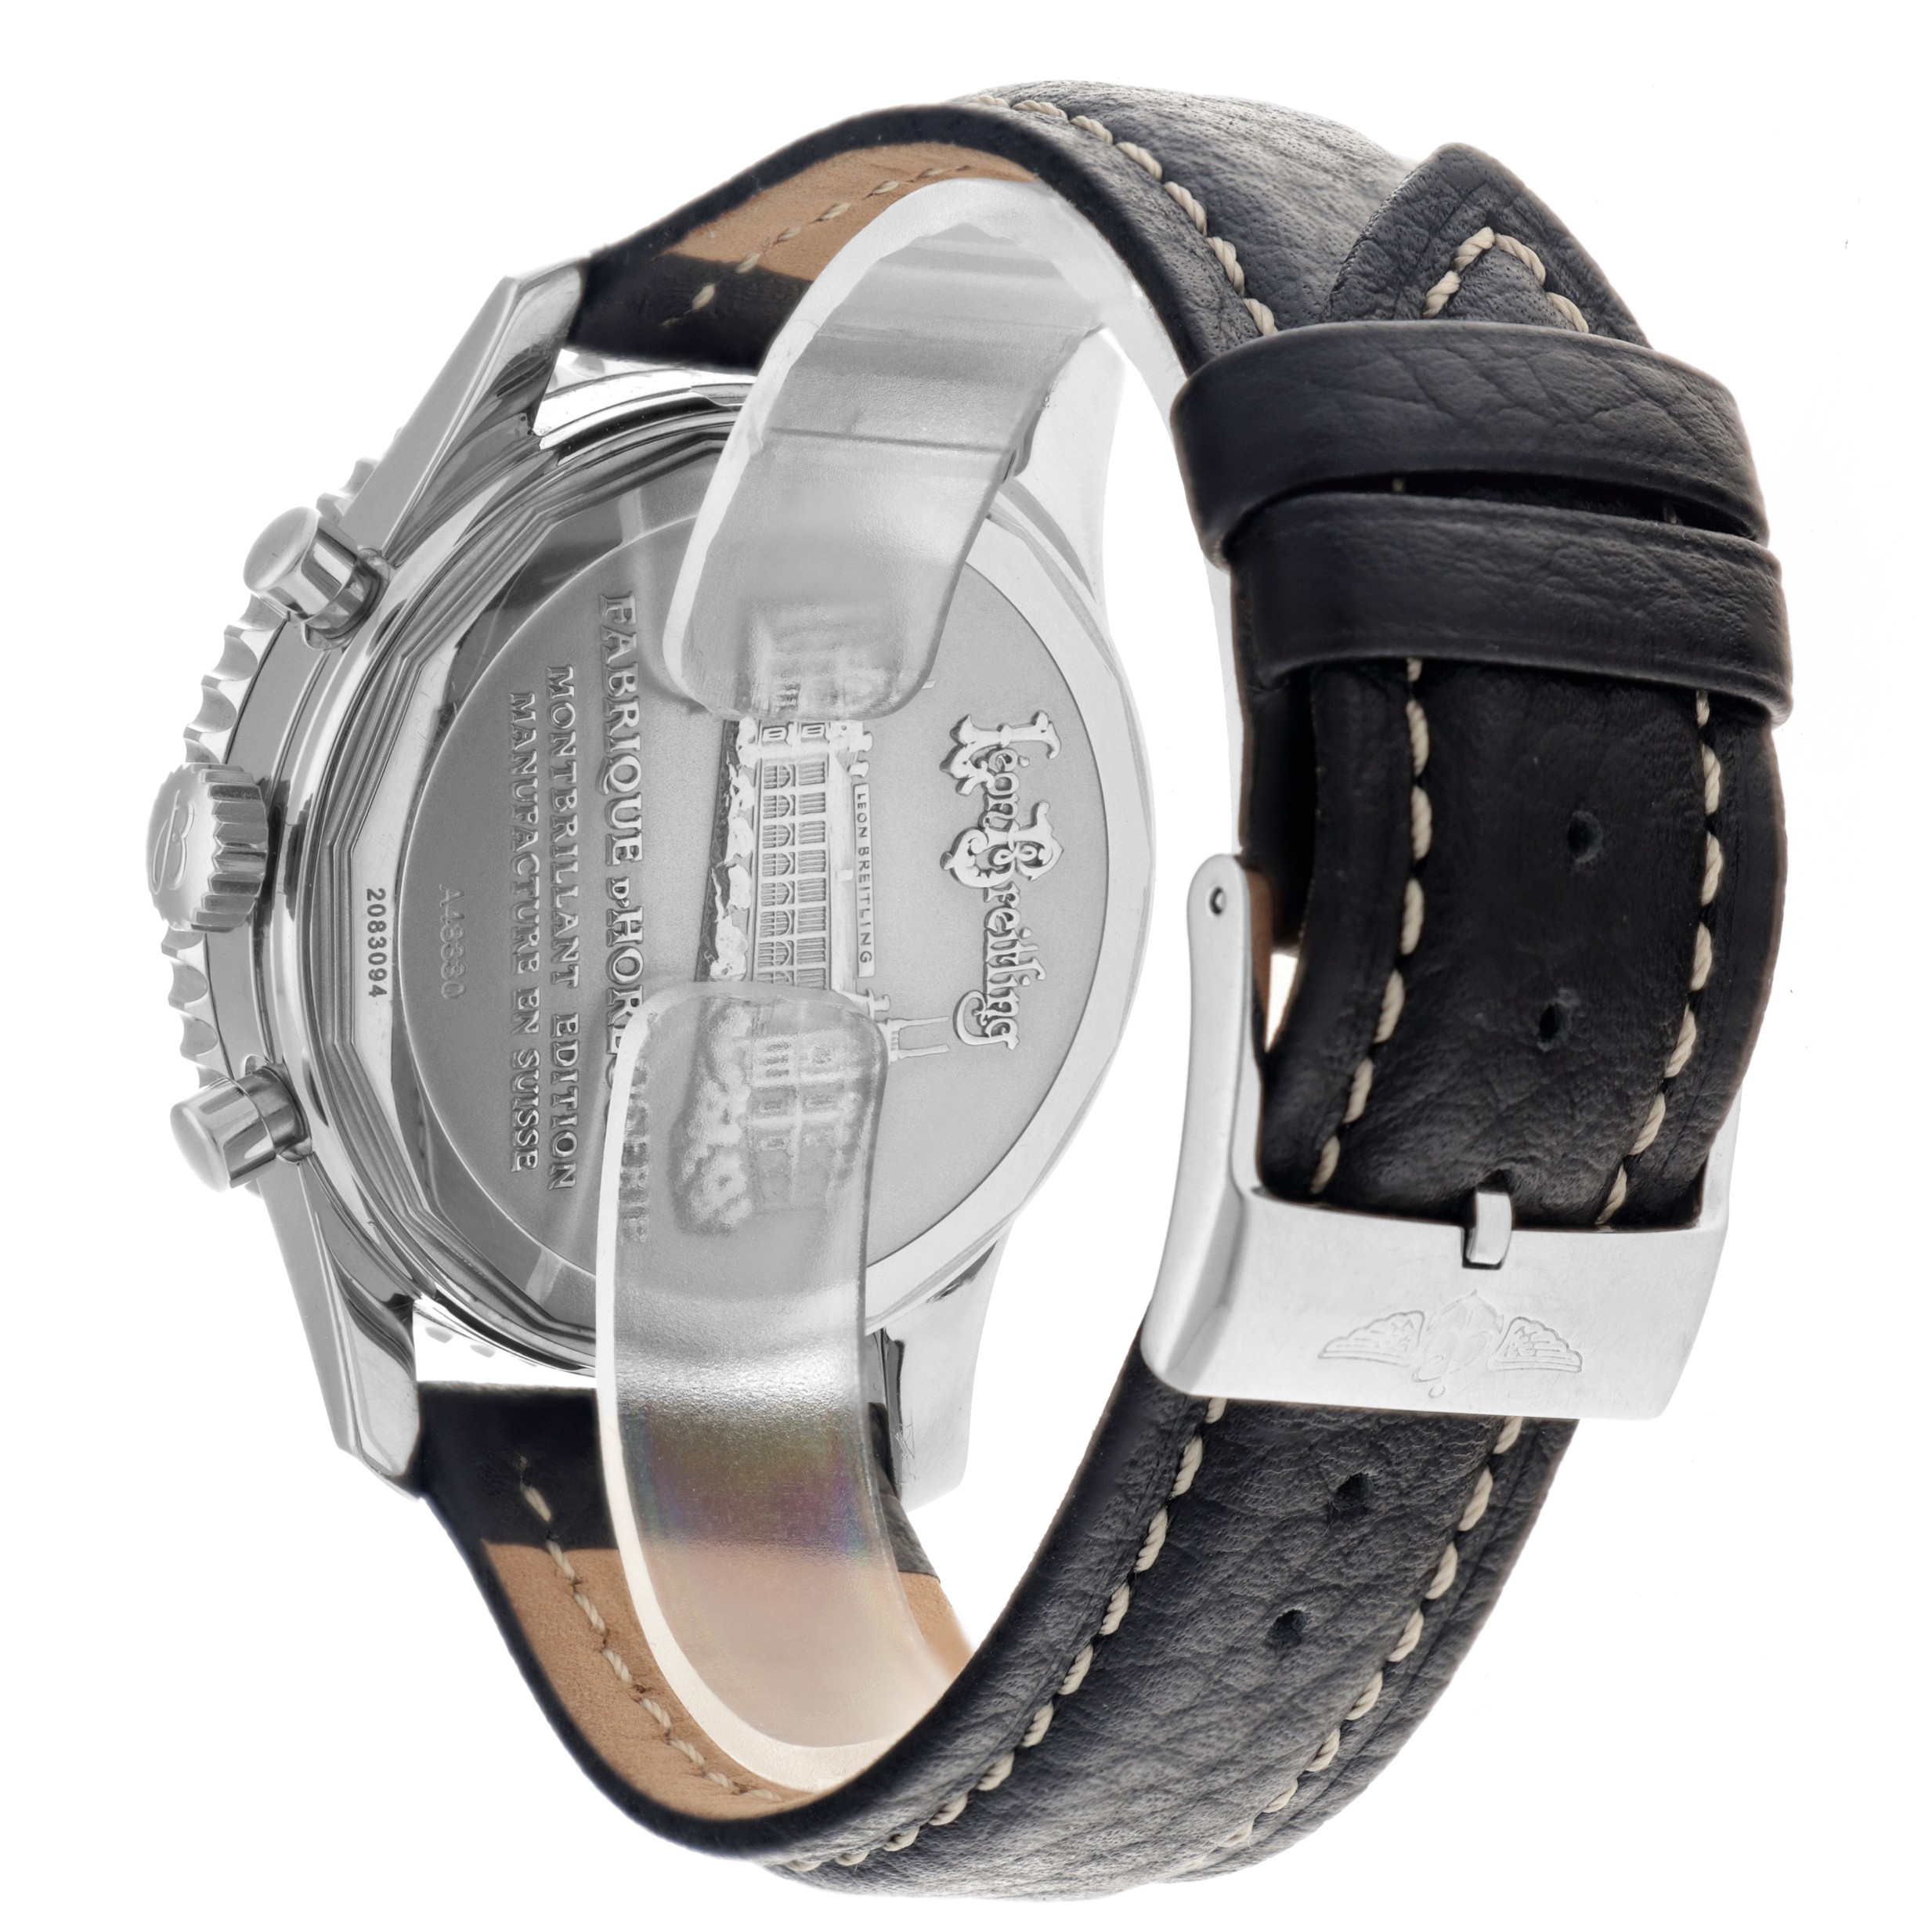 No Reserve - Breitling Navitimer Montbrilliant A48330 - Men's watch - 2006. - Image 3 of 6